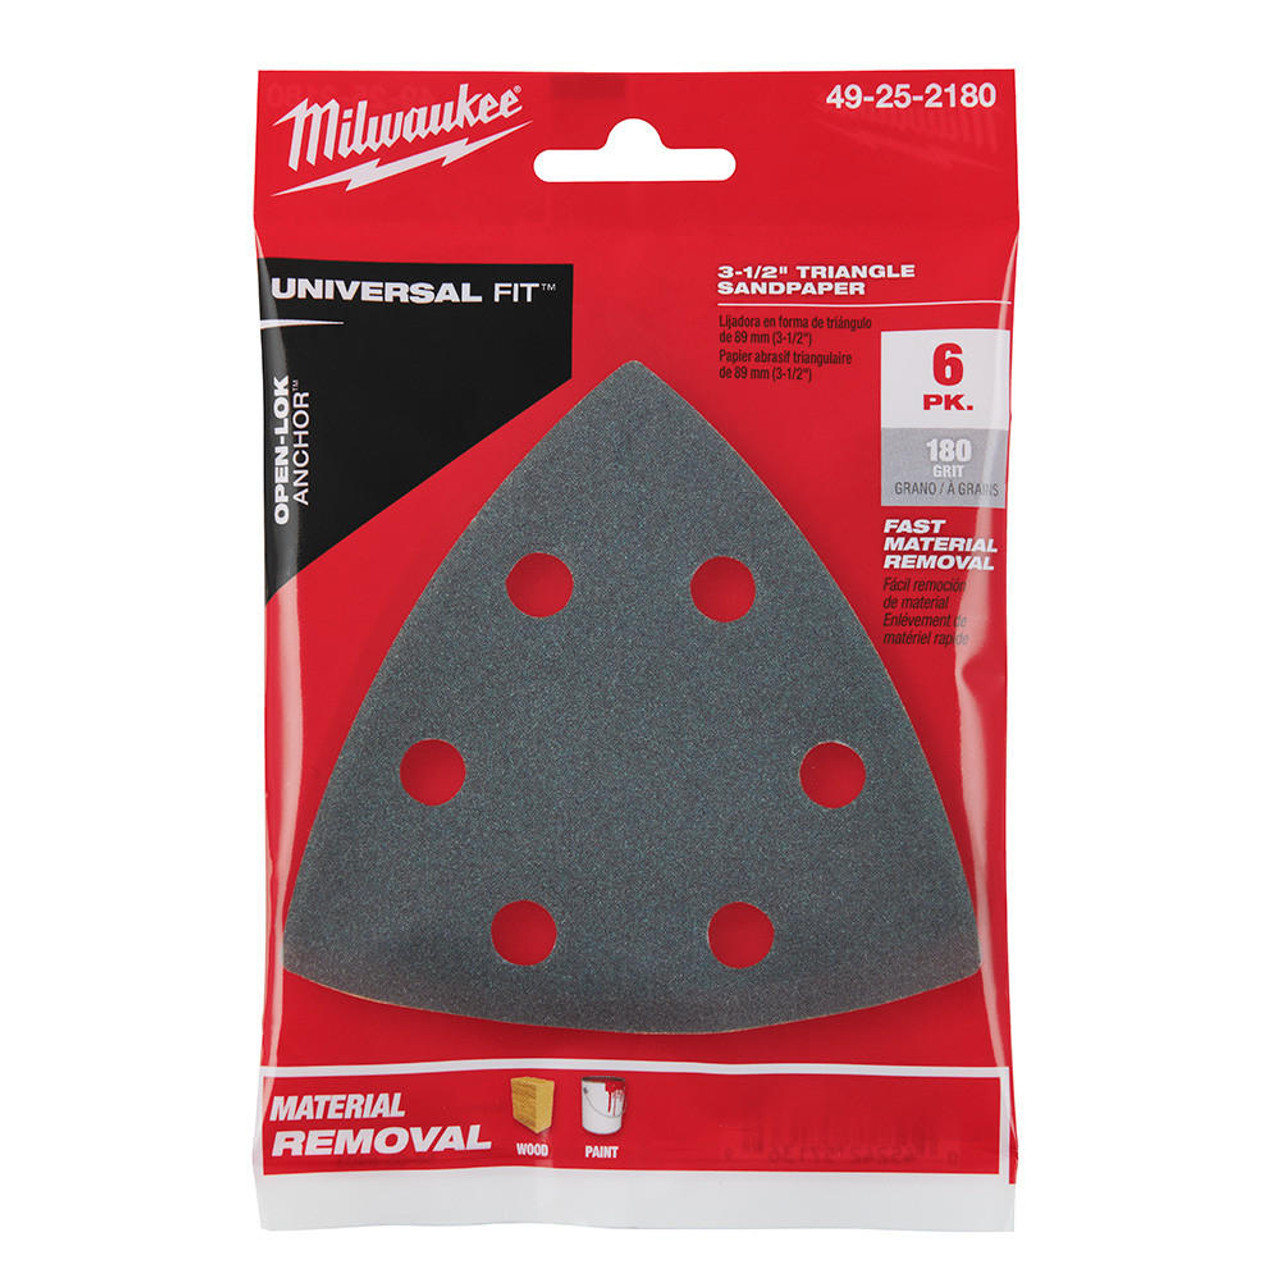  Milwaukee 3-1/2" 180 Grit Triangle Sandpaper 6PK 49-25-2180 